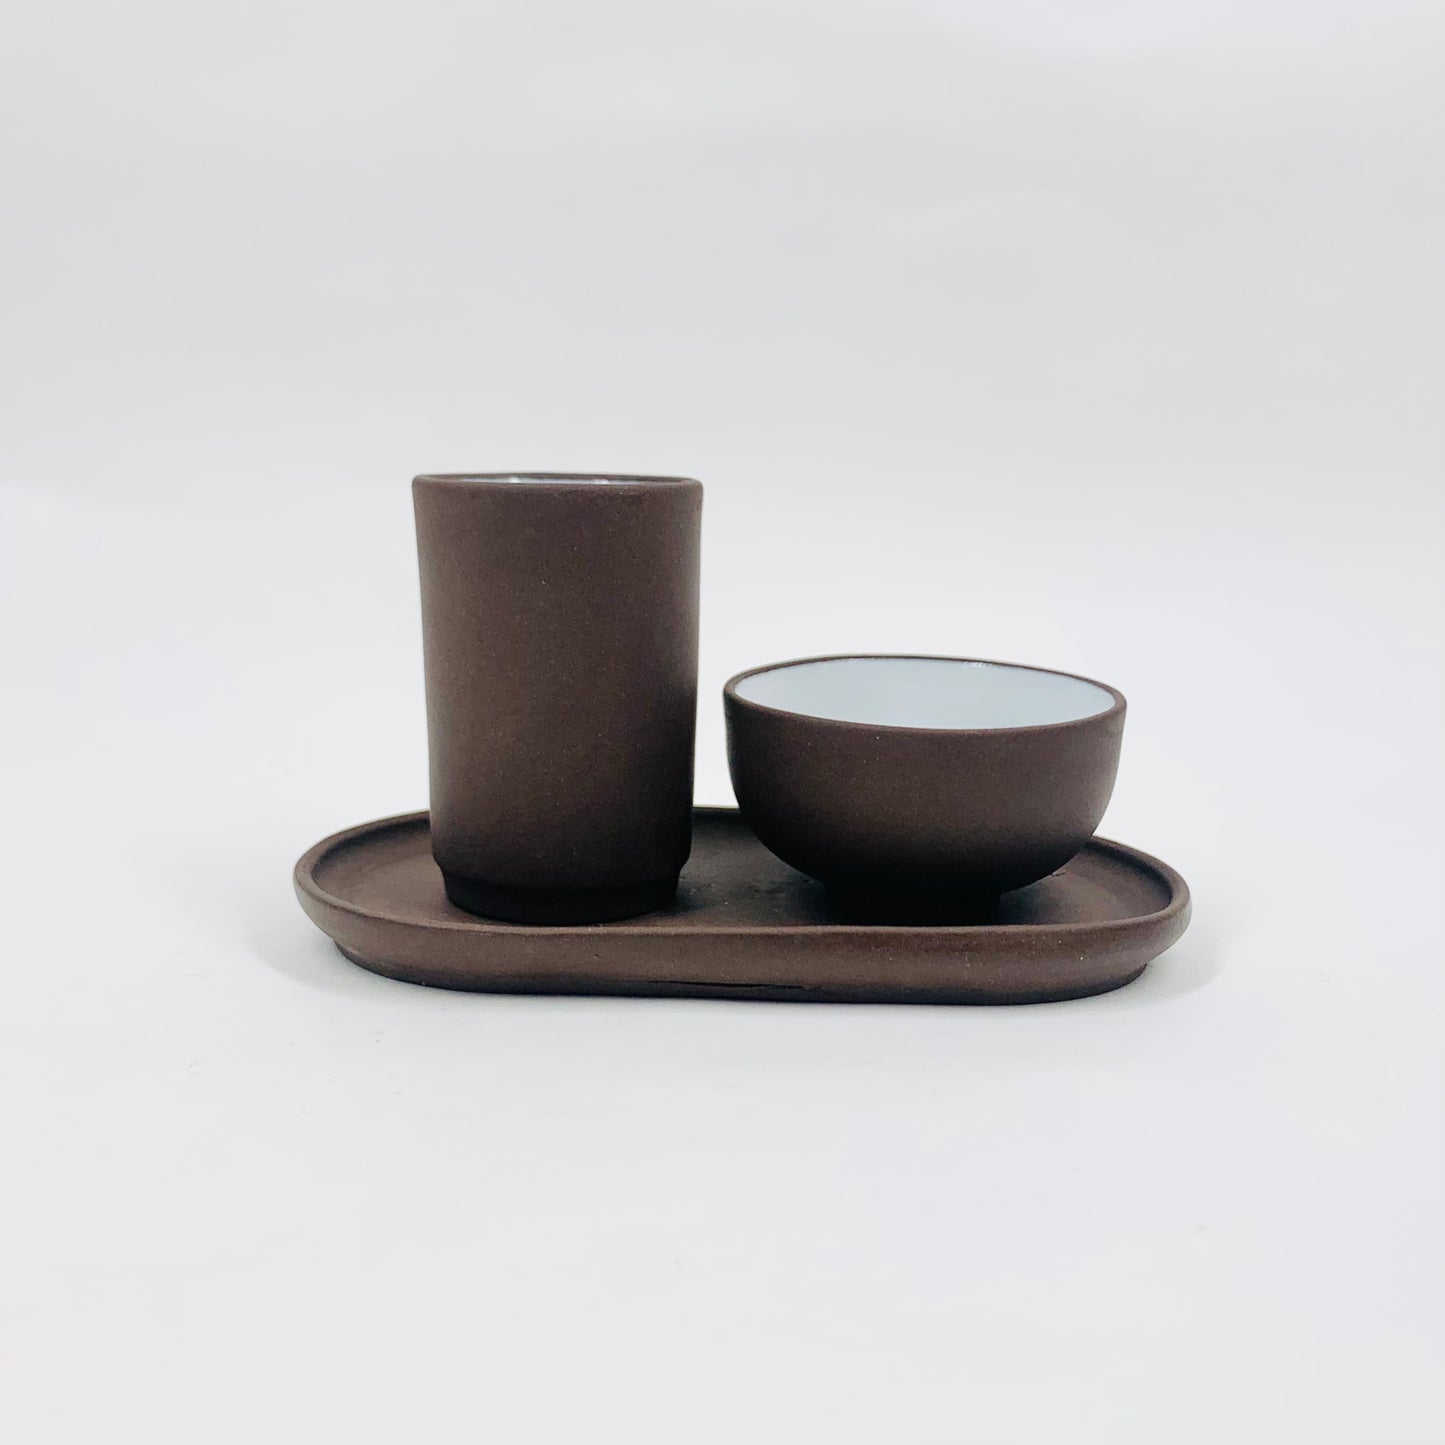 Rare Midcentury Japanese brown pottery condiment set